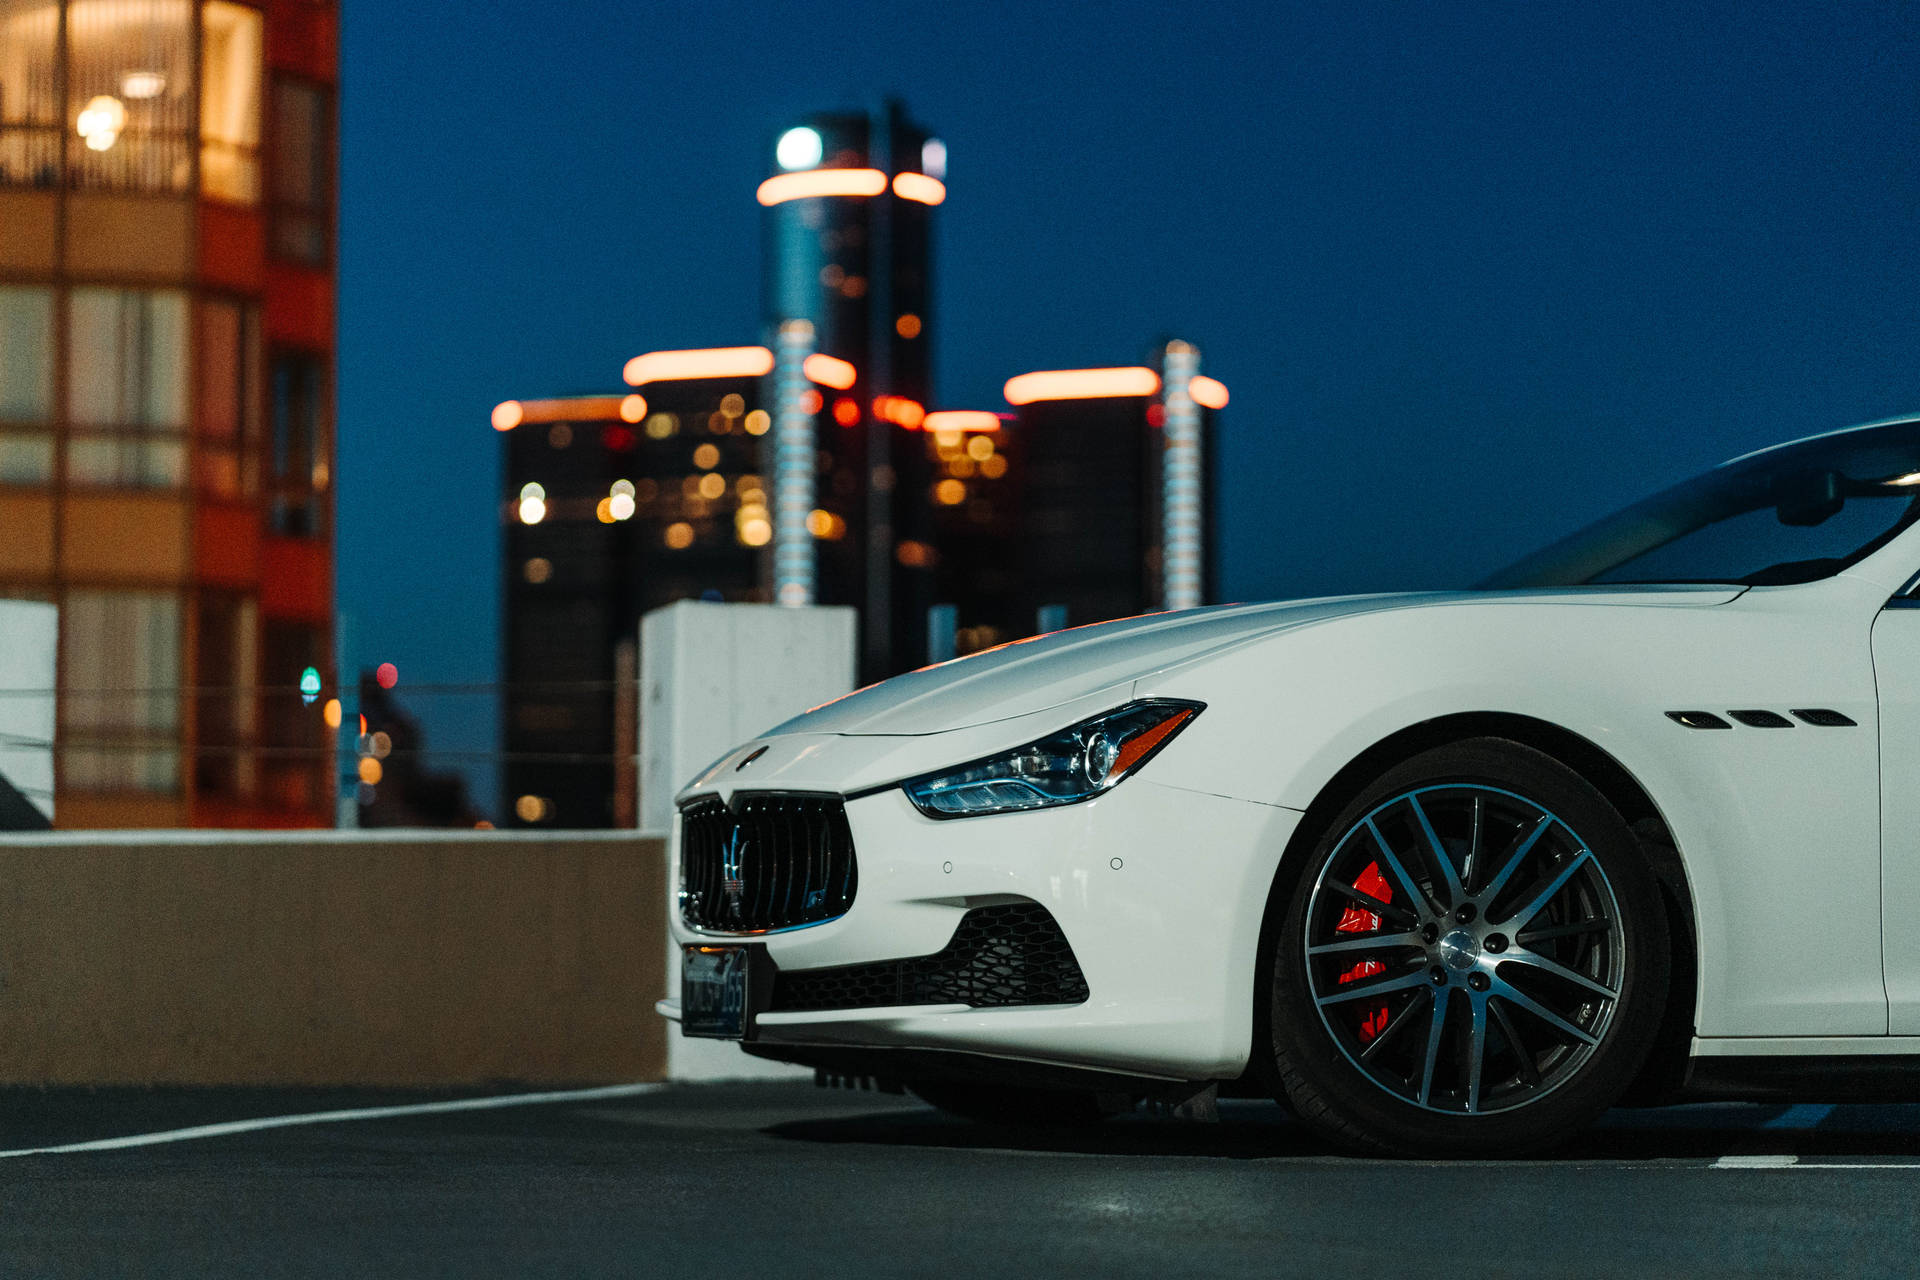 Maserati In The City Background